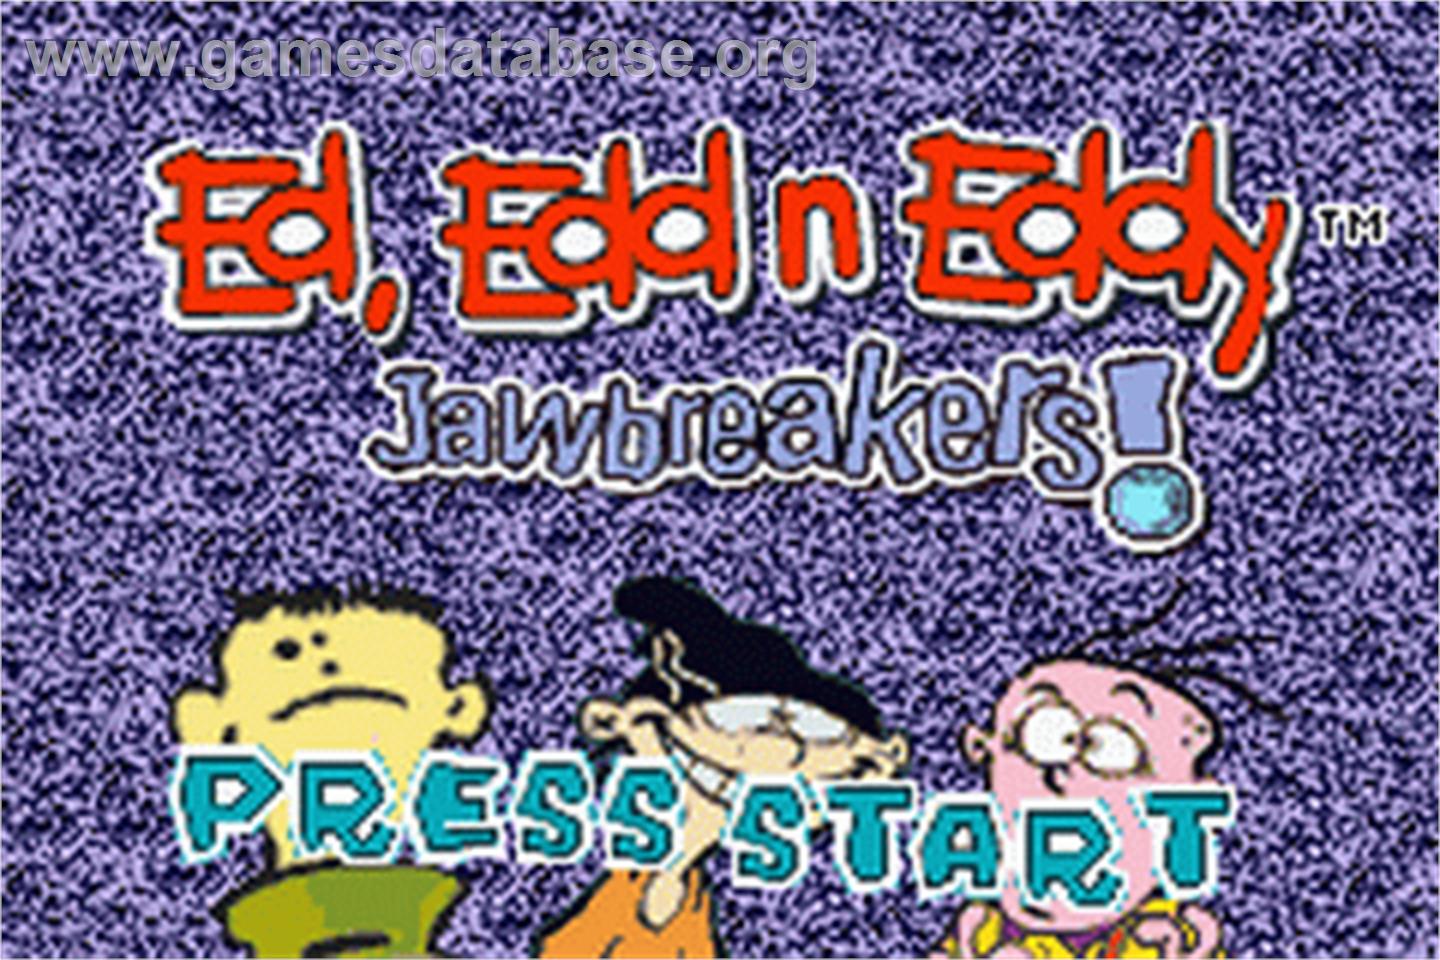 Ed, Edd n Eddy: Jawbreakers - Nintendo Game Boy Advance - Artwork - Title Screen